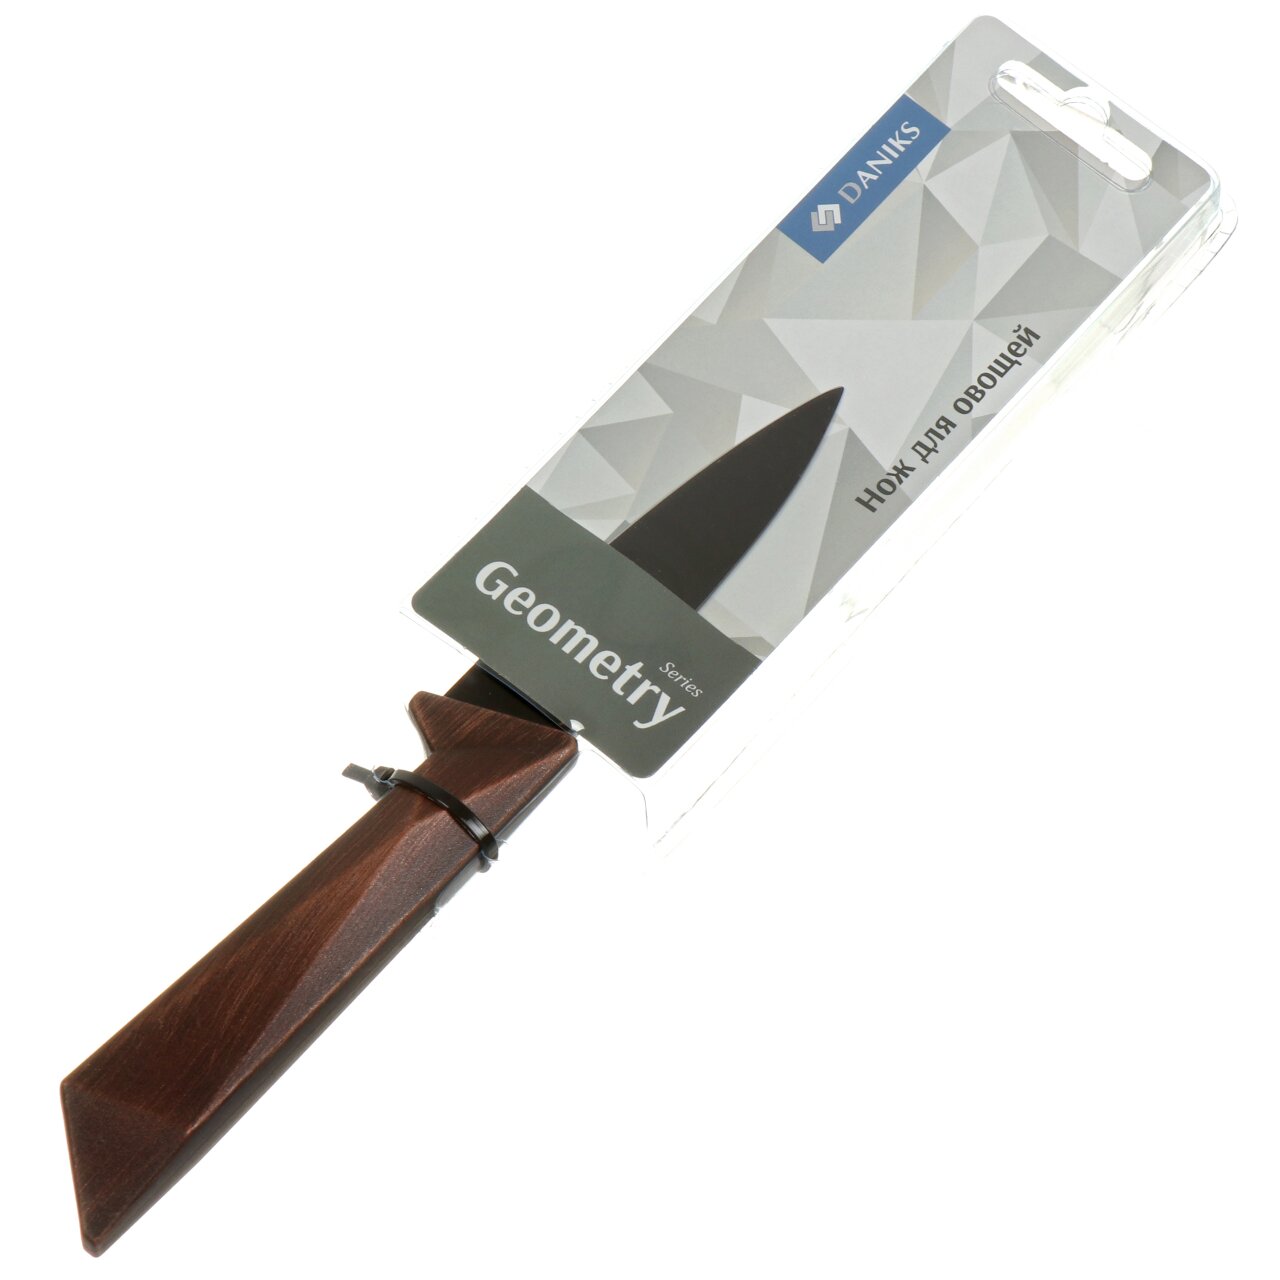 Нож кухонный Daniks, Геометрия, для овощей, нержавеющая сталь, 9 см, рукоятка пластик, JA20200944-5